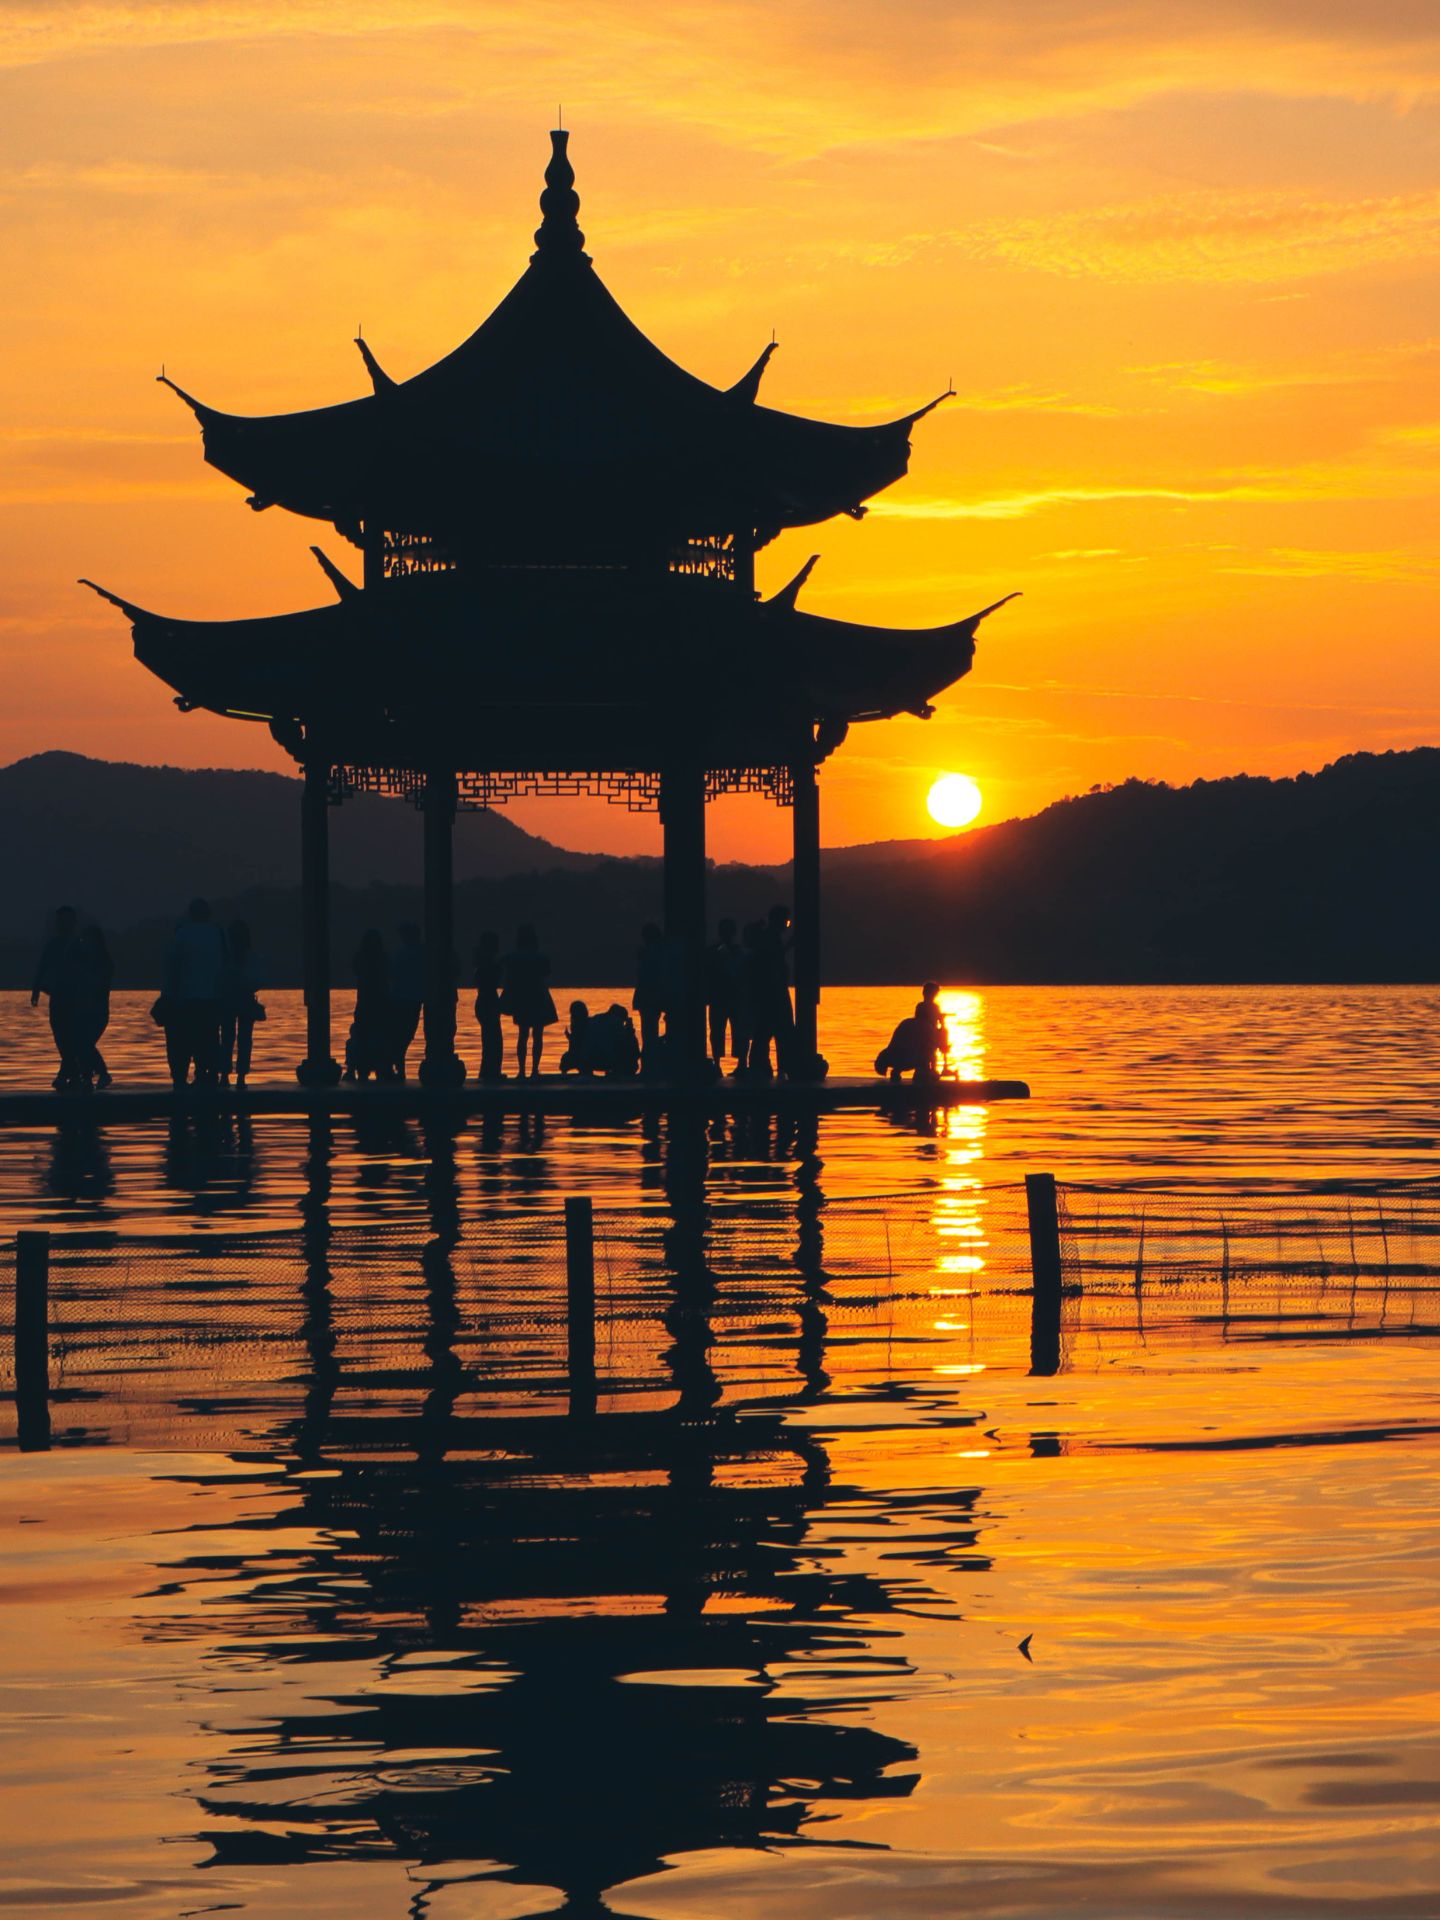 Pagodas on Xi Lake, China during golden hour